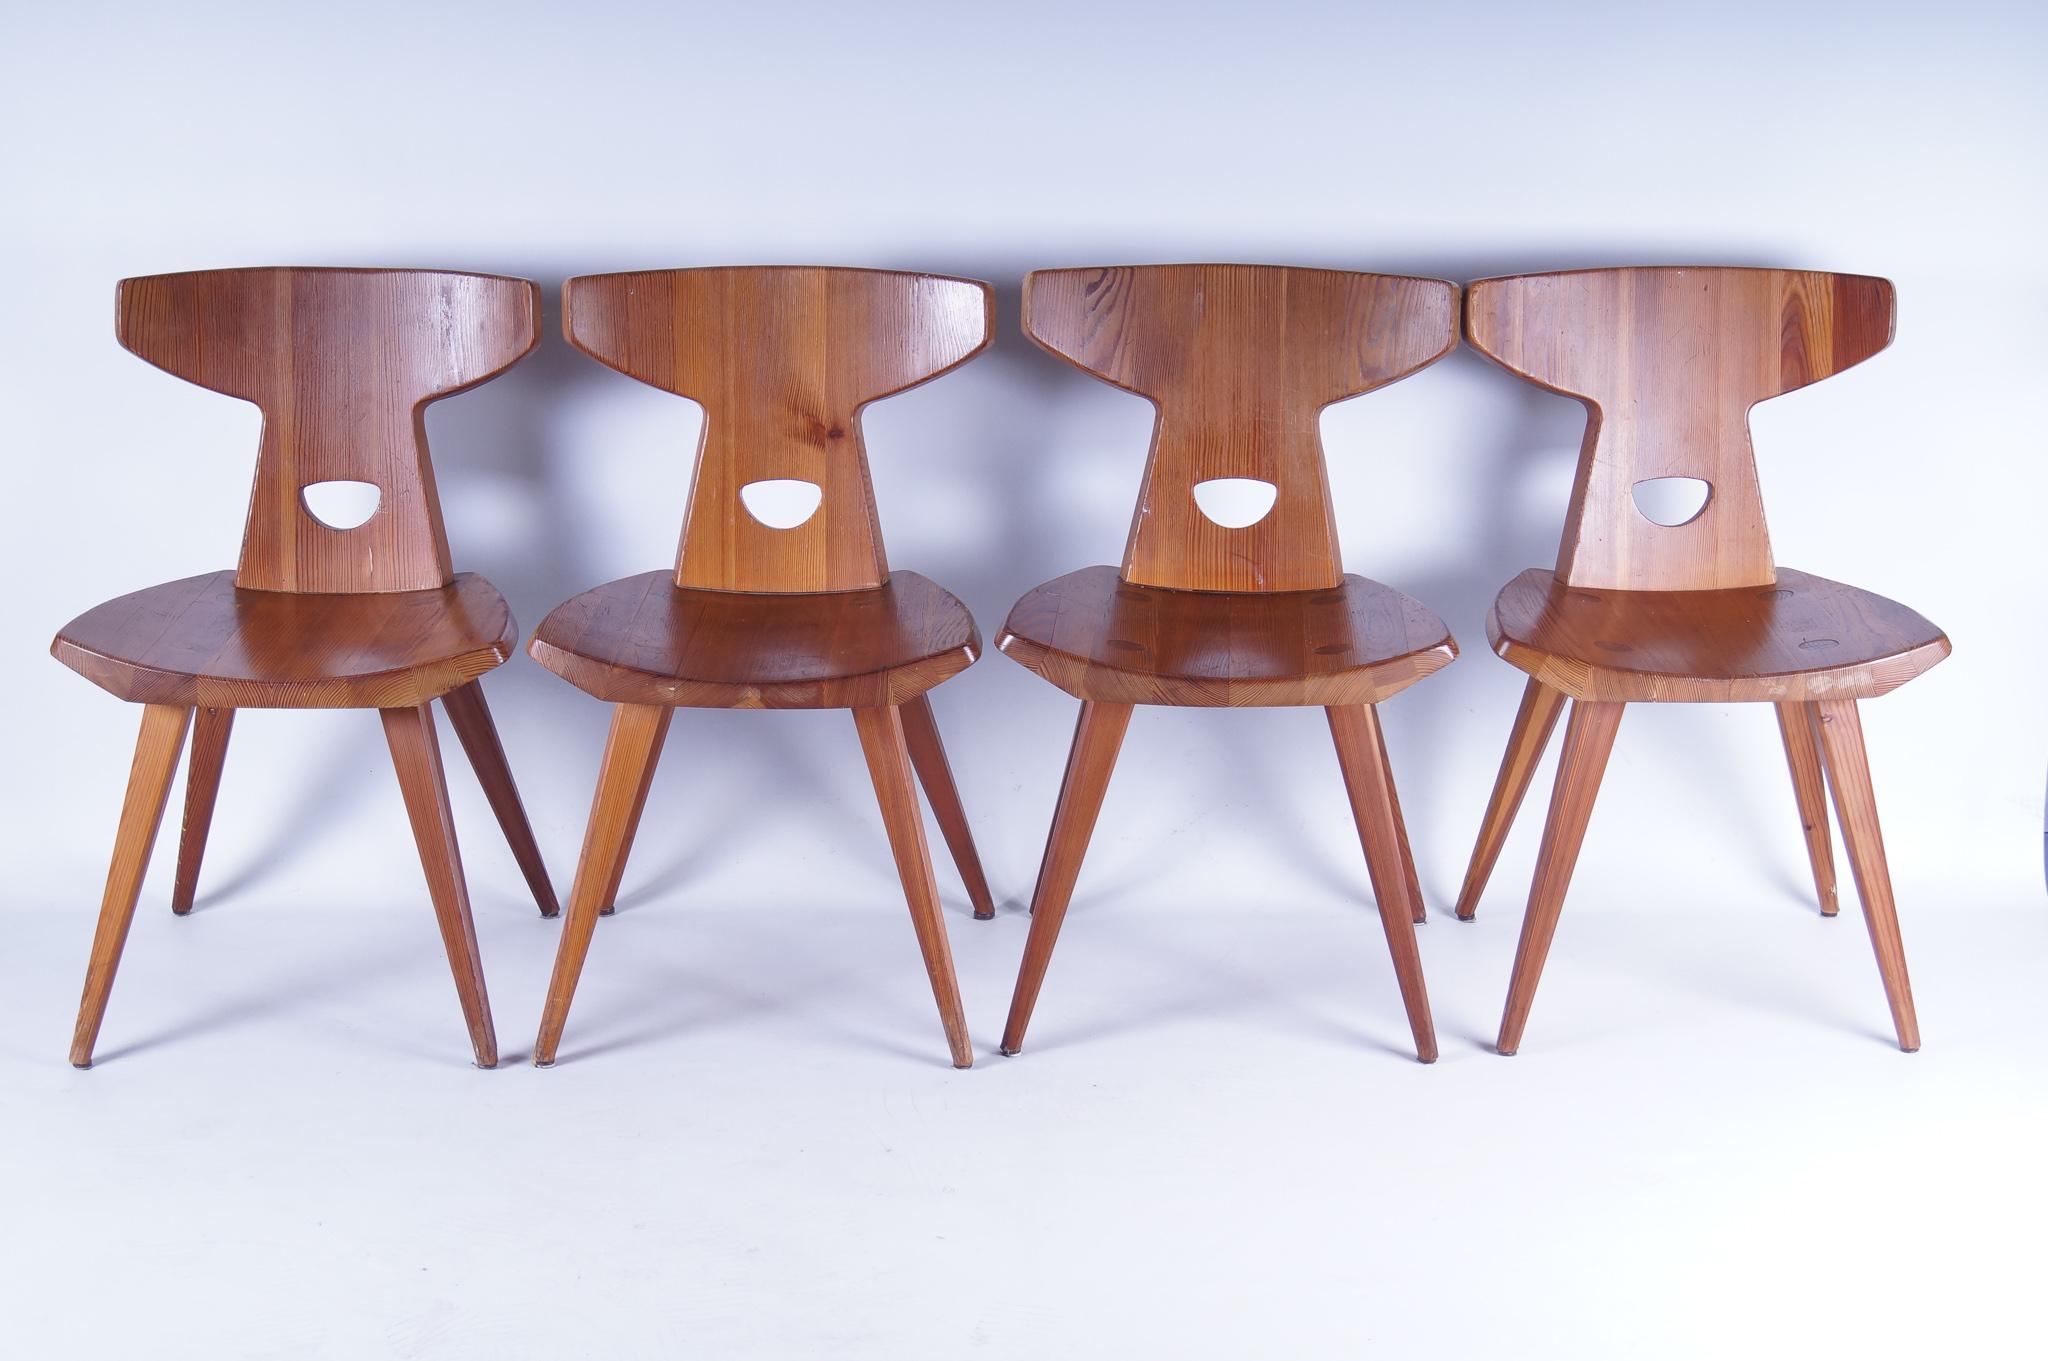 Mid-Century Modern 1960s Jacob Kielland-Brandt Dining Room Chairs for I. Christiansen, Set of 4